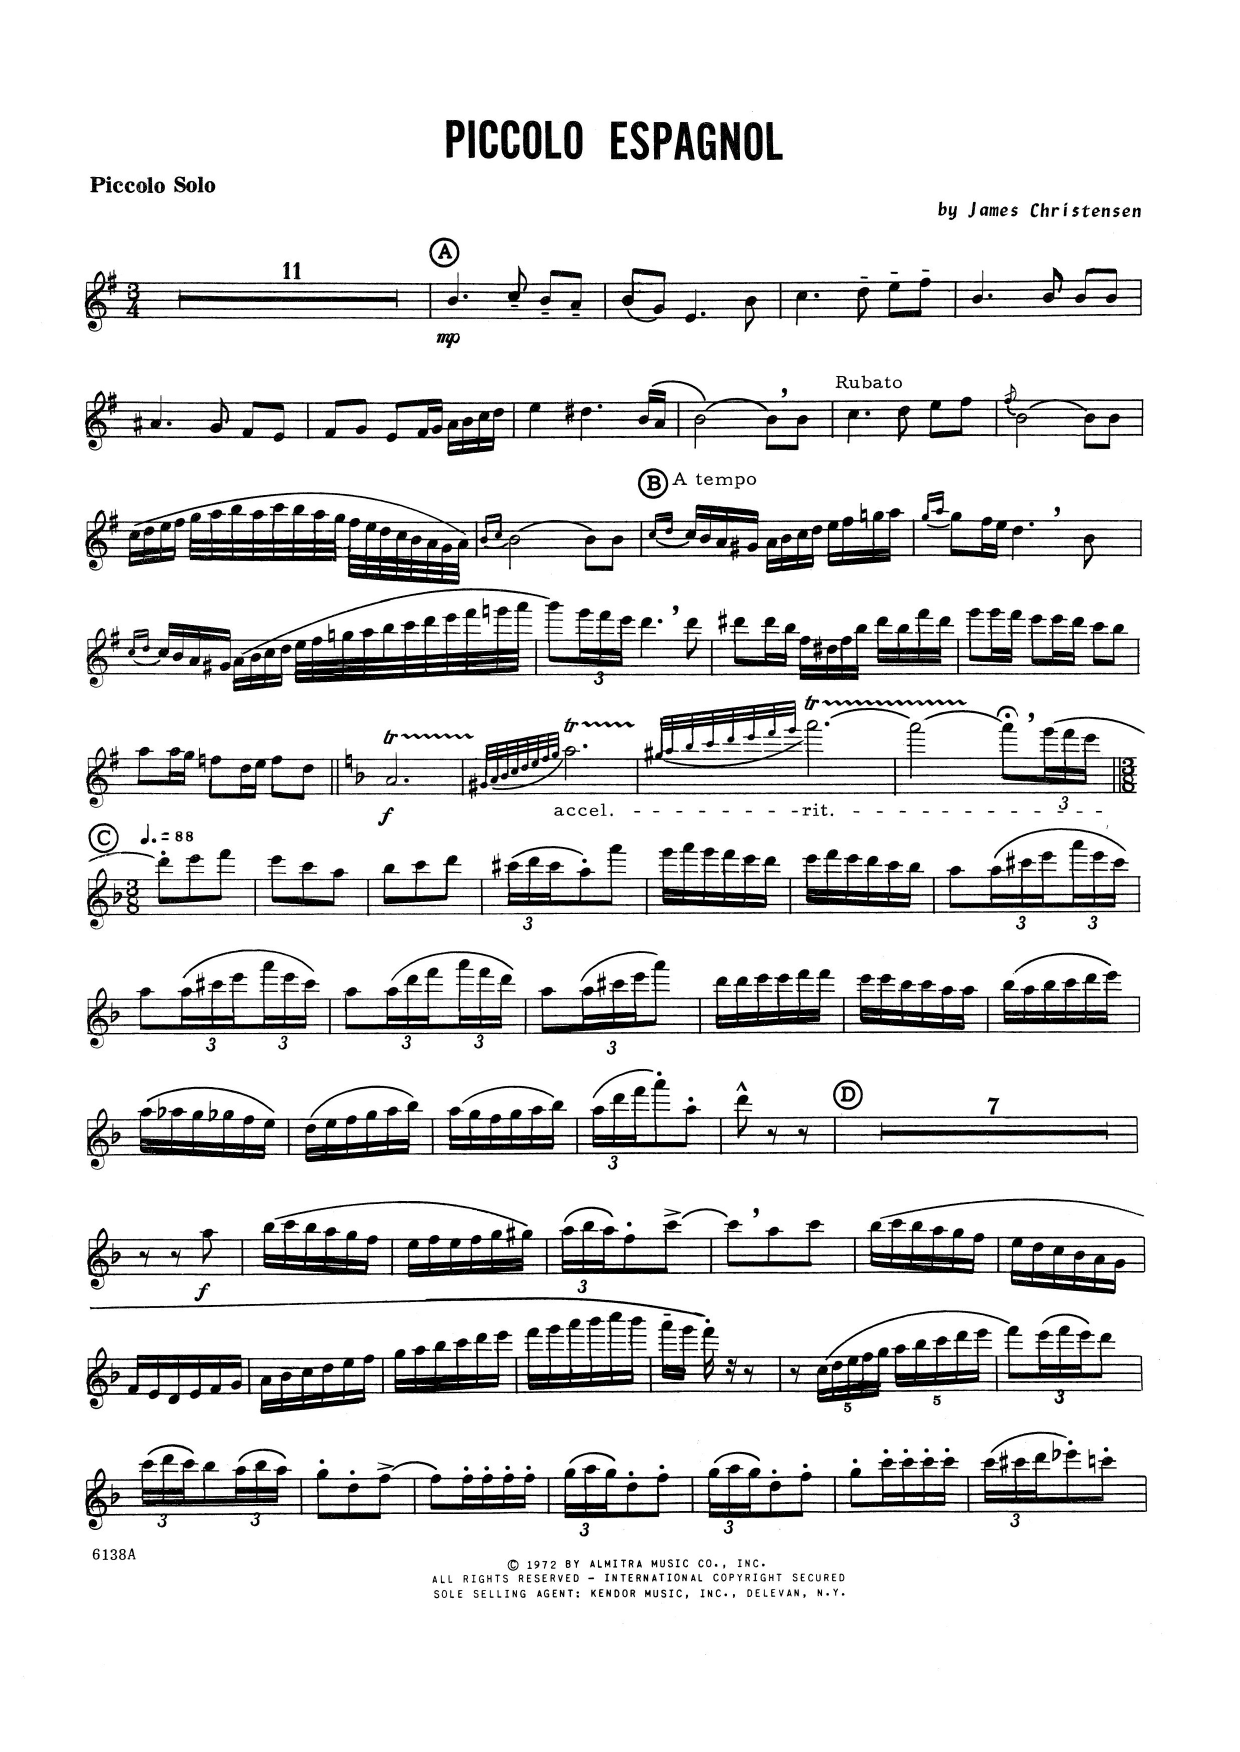 Piccolo Espagnol - Piano sheet music